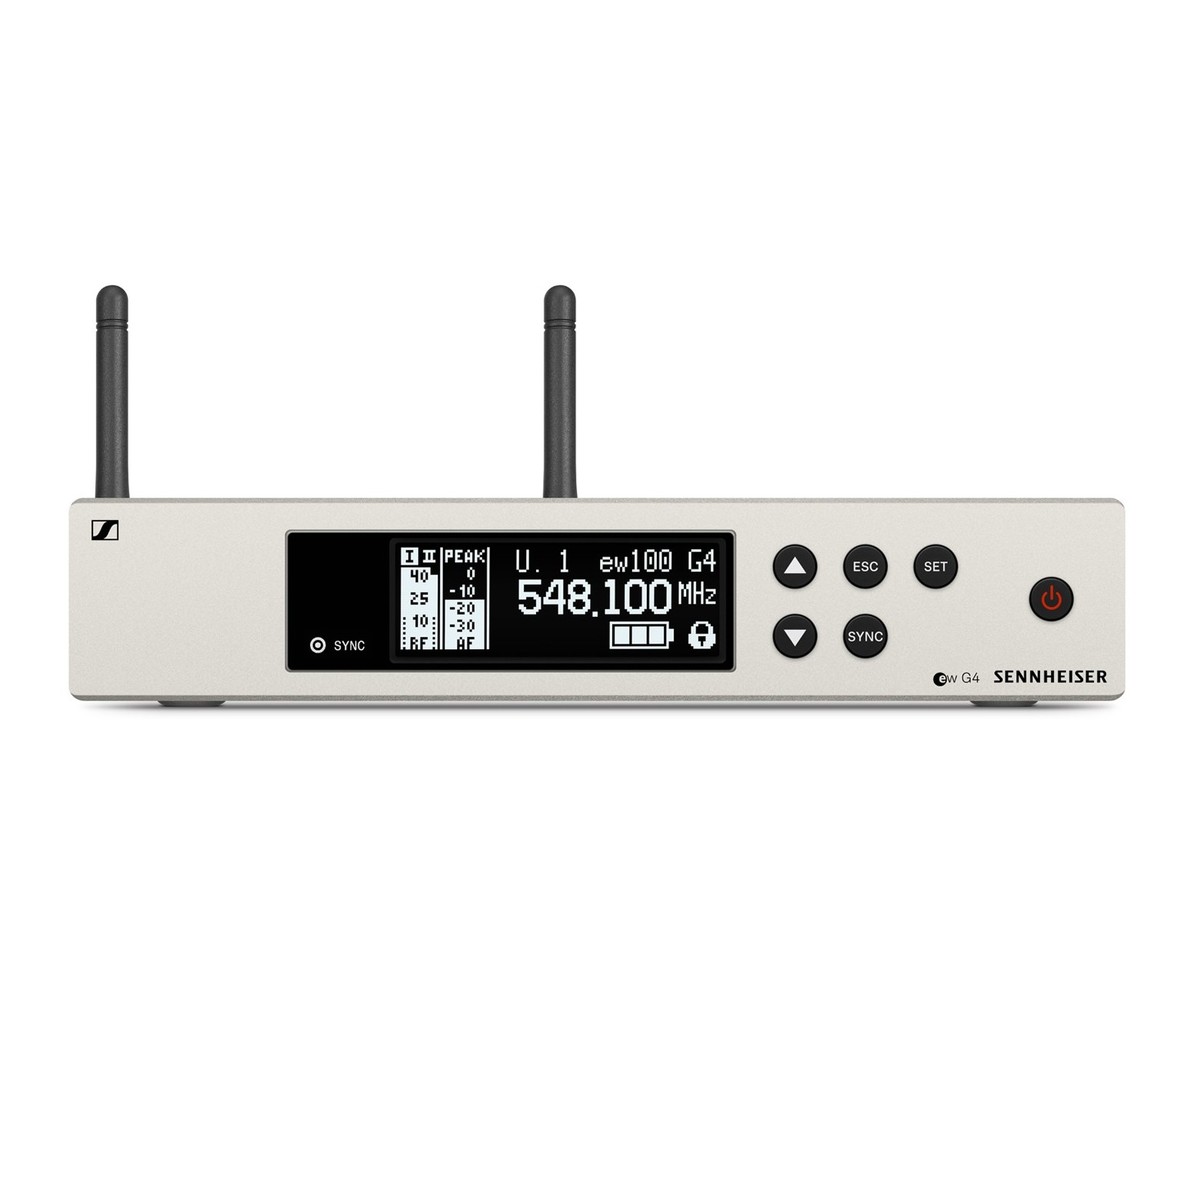 SENNHEISER EW100 G4 865 S RANGE A RADIOMICROFONO PALMARE CAPSULA SUPERCARDIOIDE 516 – 558 Mhz 1